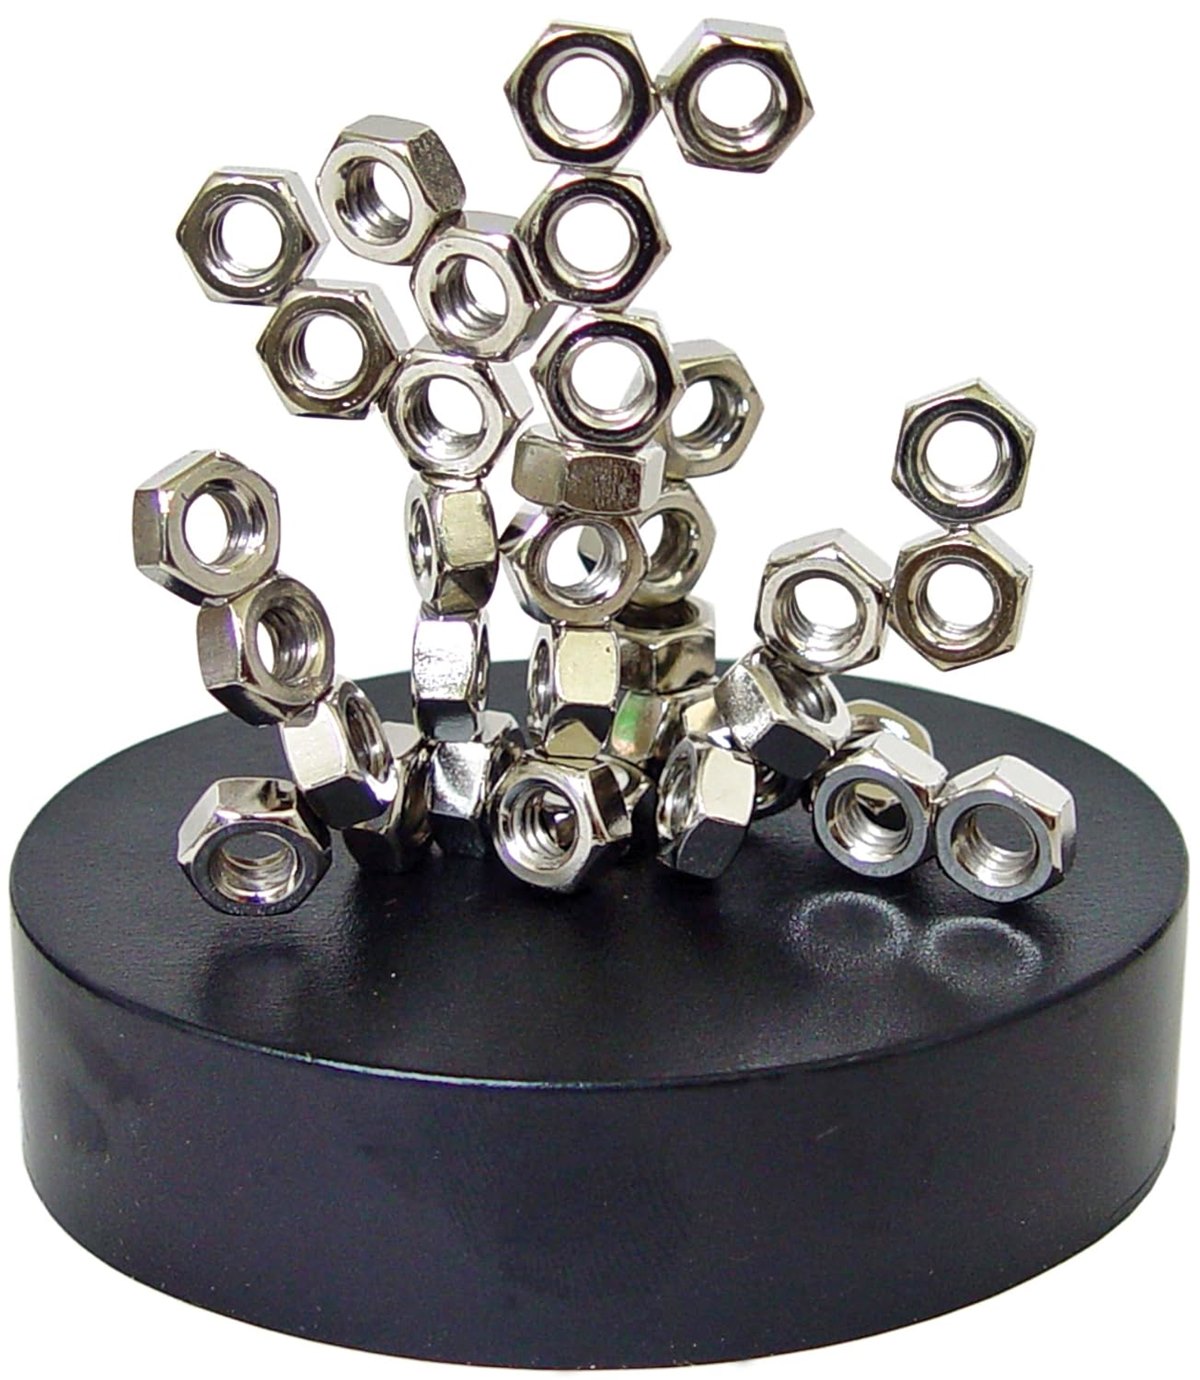 12 Superior Magnetic Sculpture Desk Toys for 2023